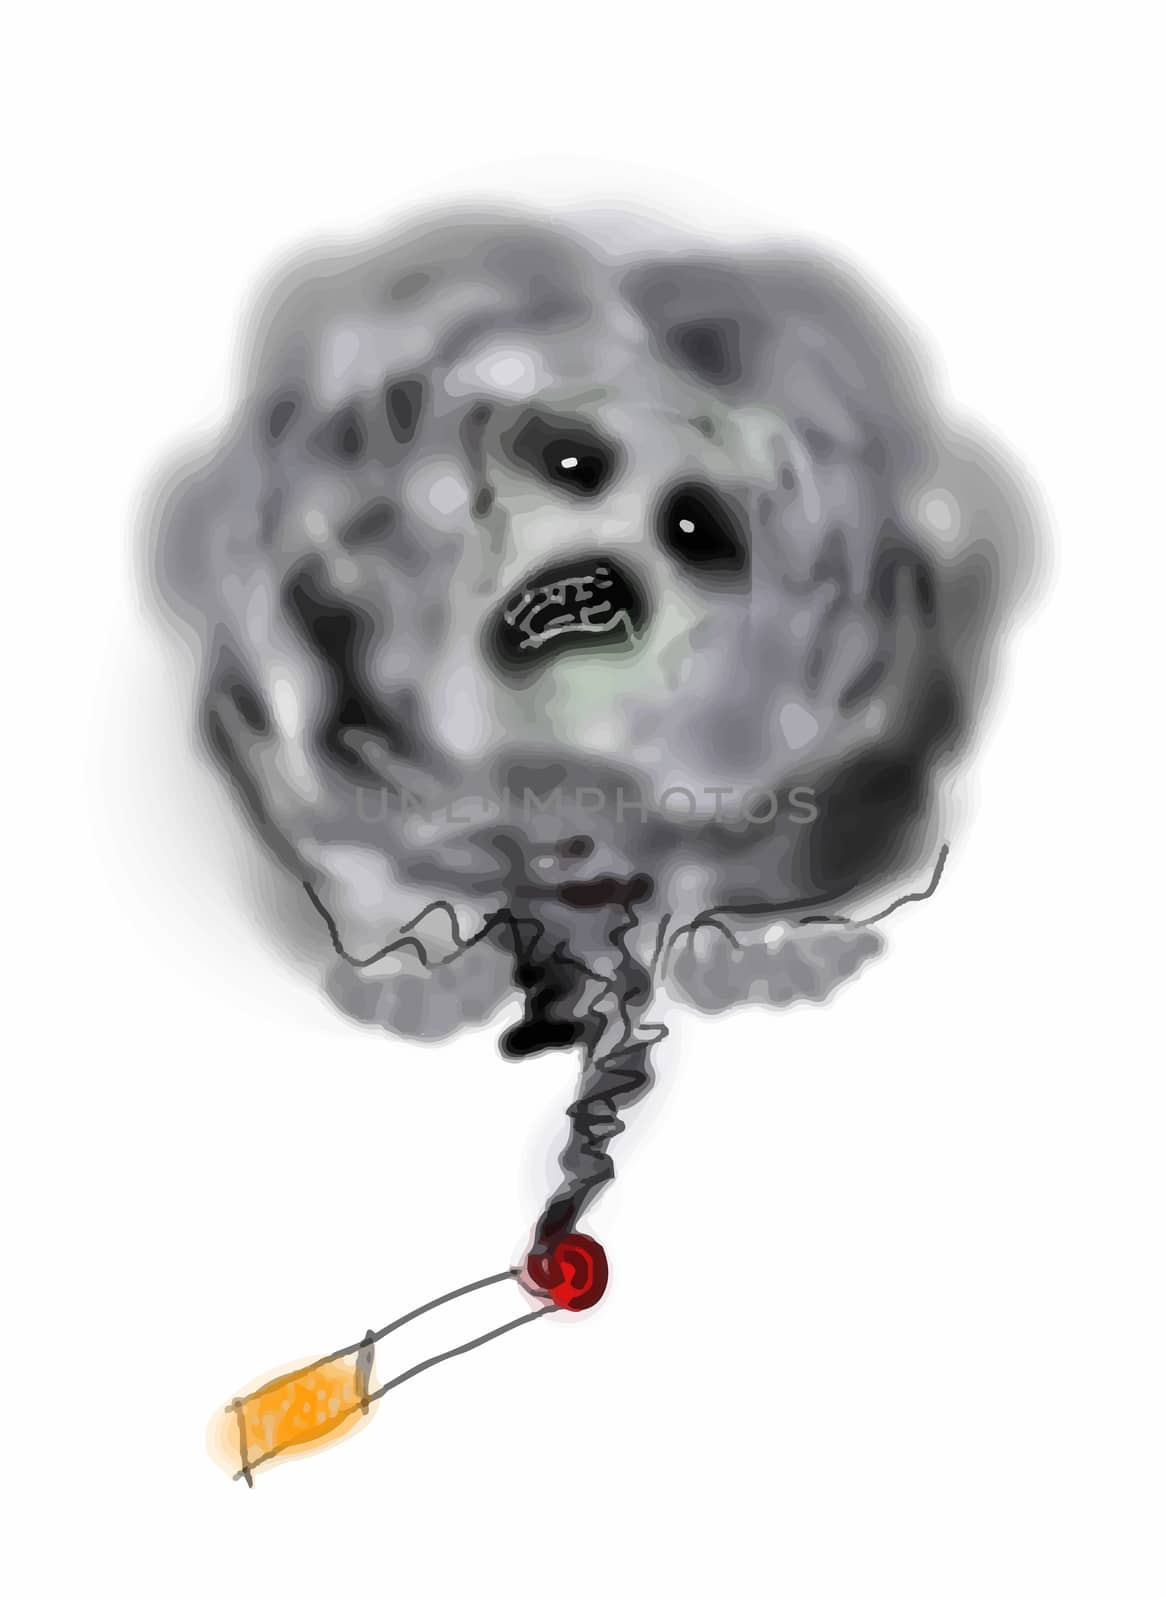 Smoking Kills  -  Ilustration of cigarette and smoke face